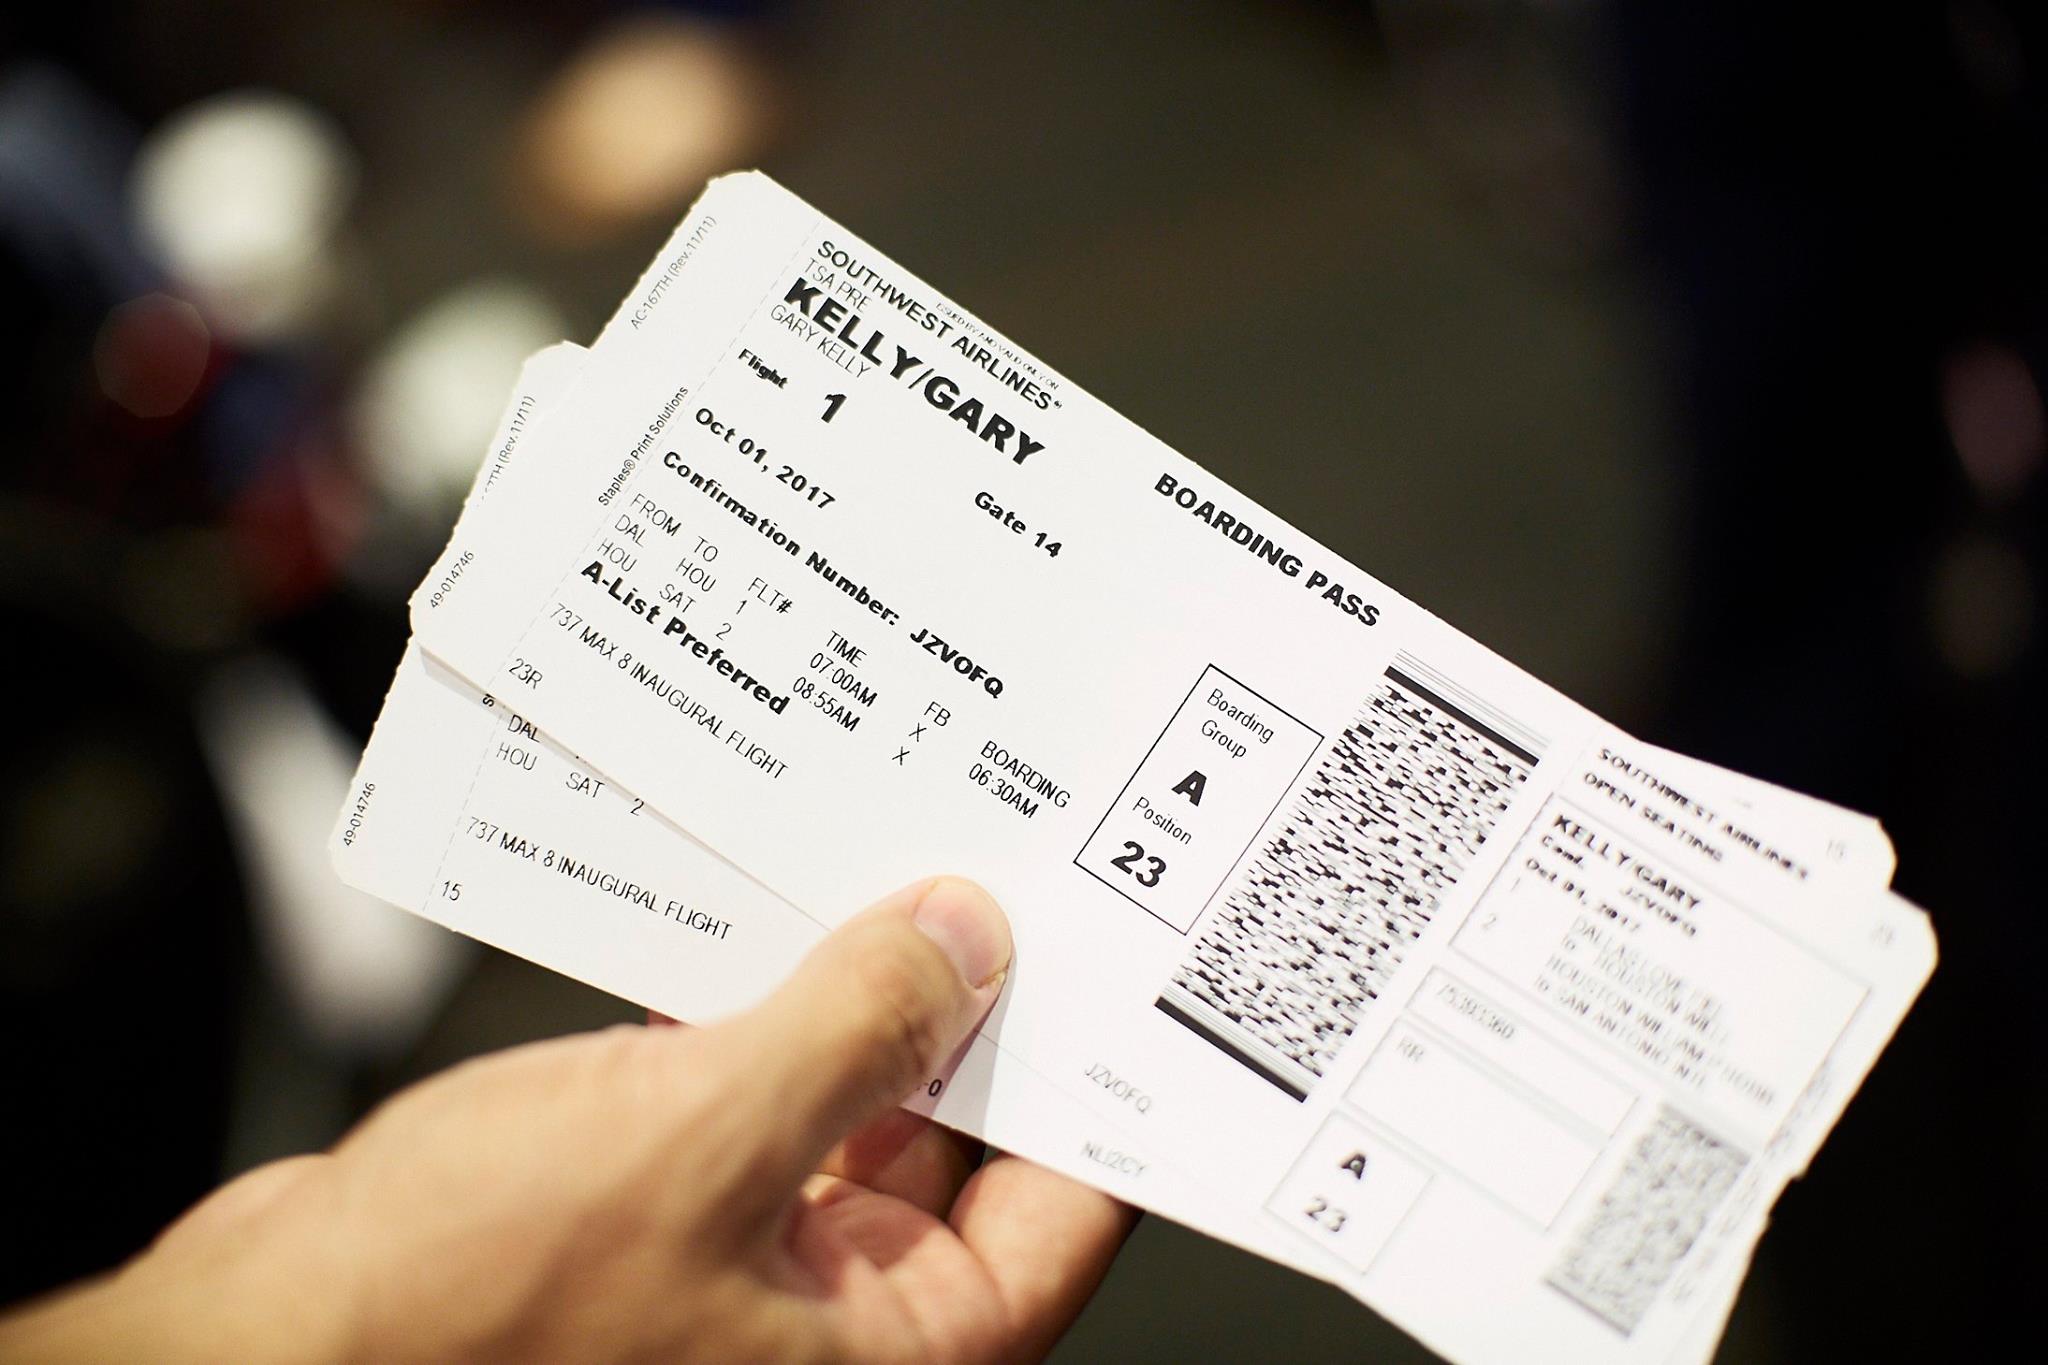 southwest airlines a-list status rewards – Southwest airline tickets